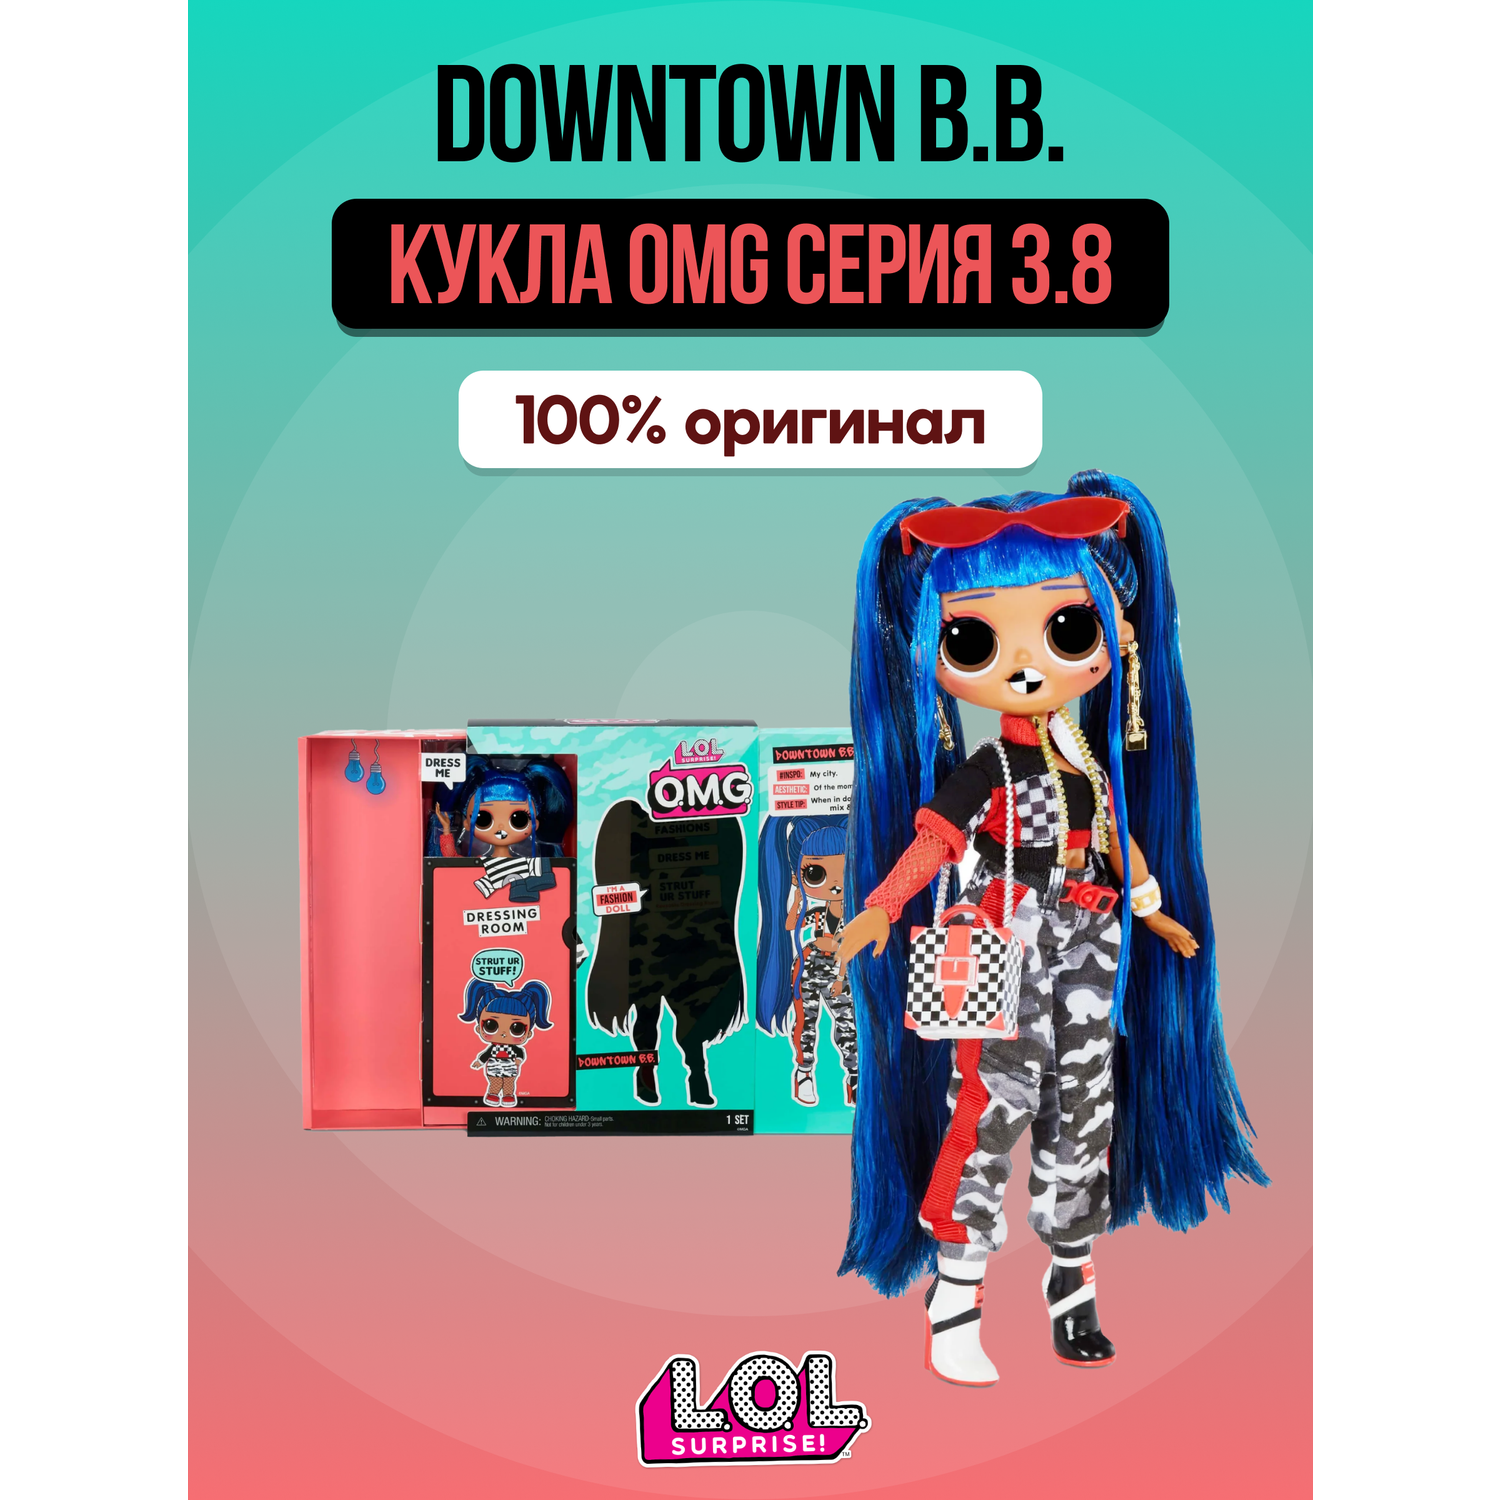 Игровой набор с куклой L.O.L. Surprise! OMG Downtown B.B. 00-00016050 - фото 2